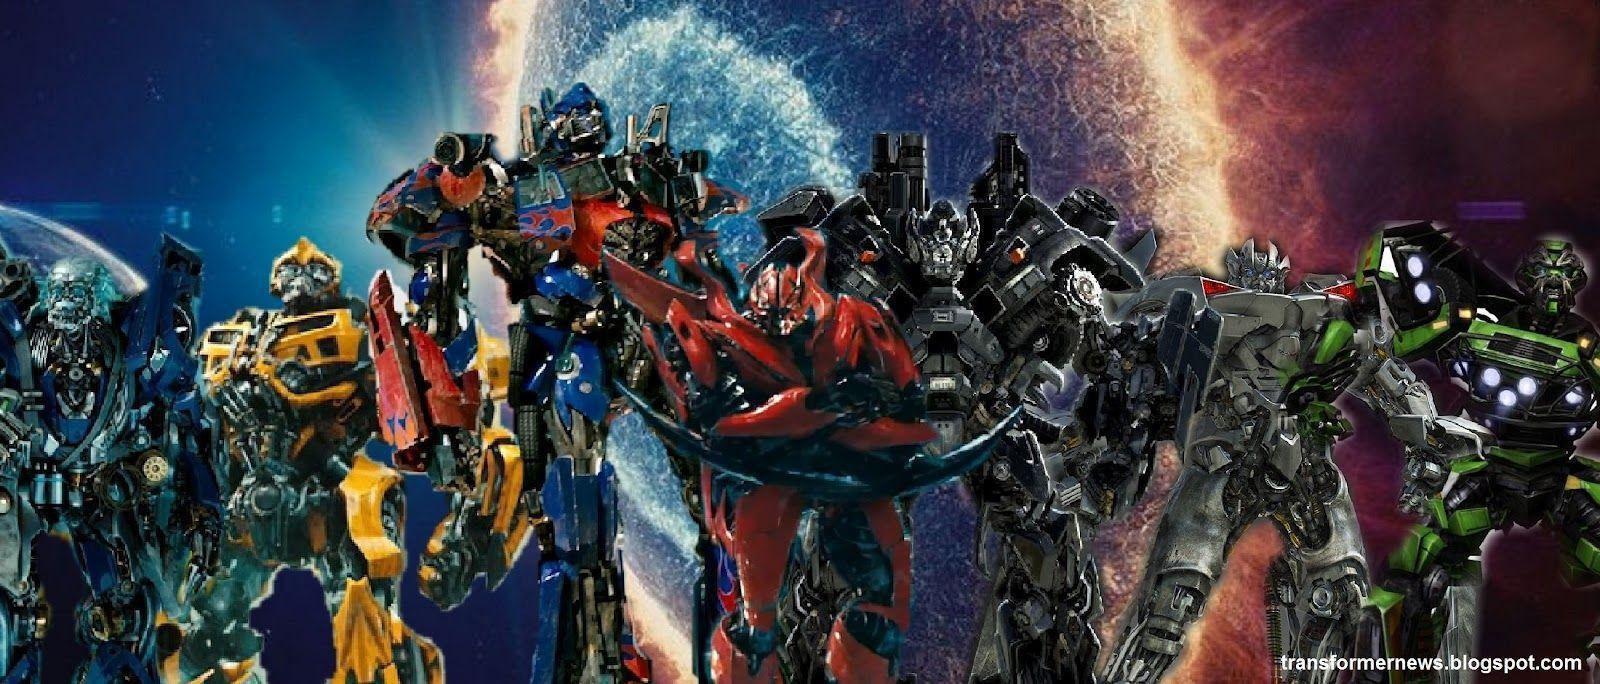 Transformers 3 Wallpaper Autobots